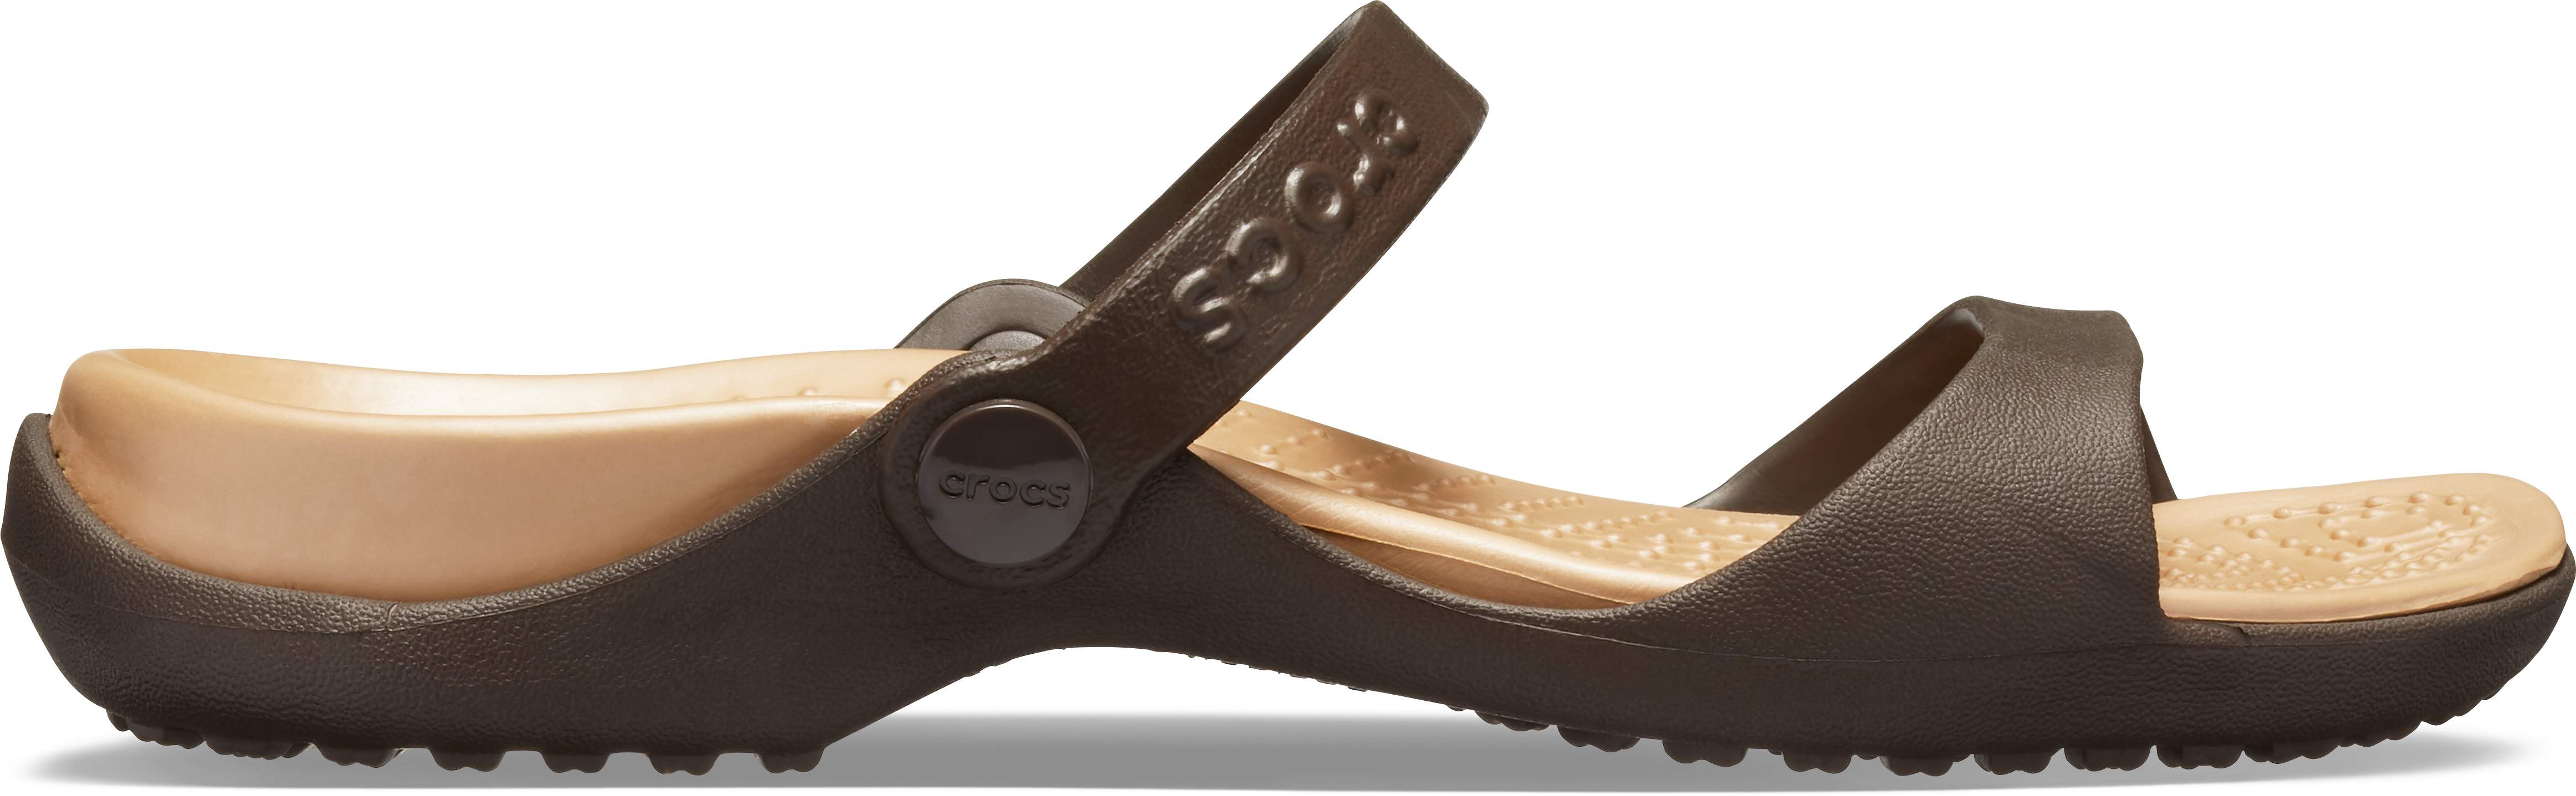 crocs womens sandals clearance